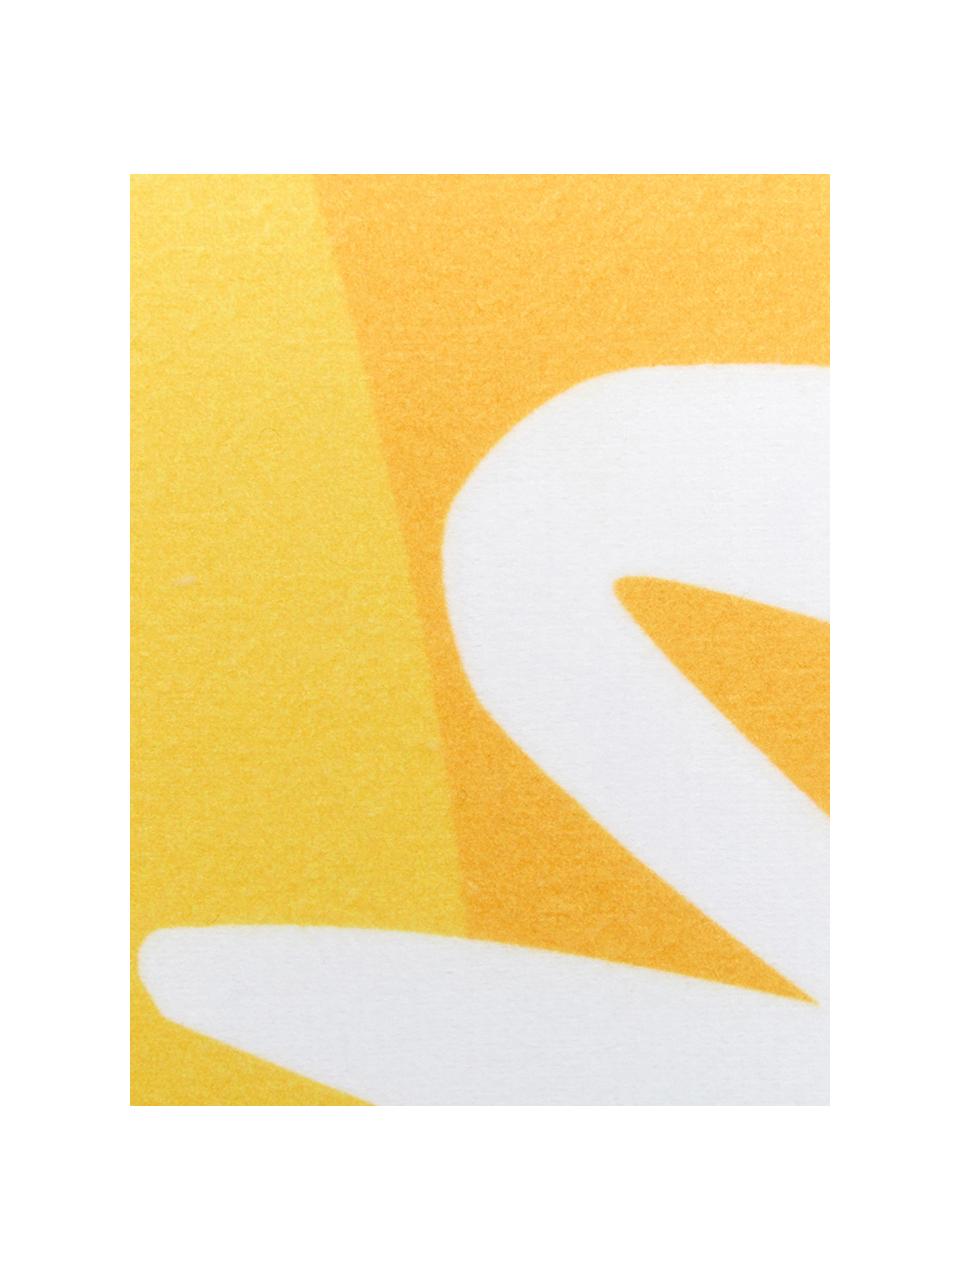 Licht strandlaken Vacay Vibes, 55% polyester, 45% katoen zeer lichte kwaliteit, 340 g/m², Multicolour, 70 x 150 cm